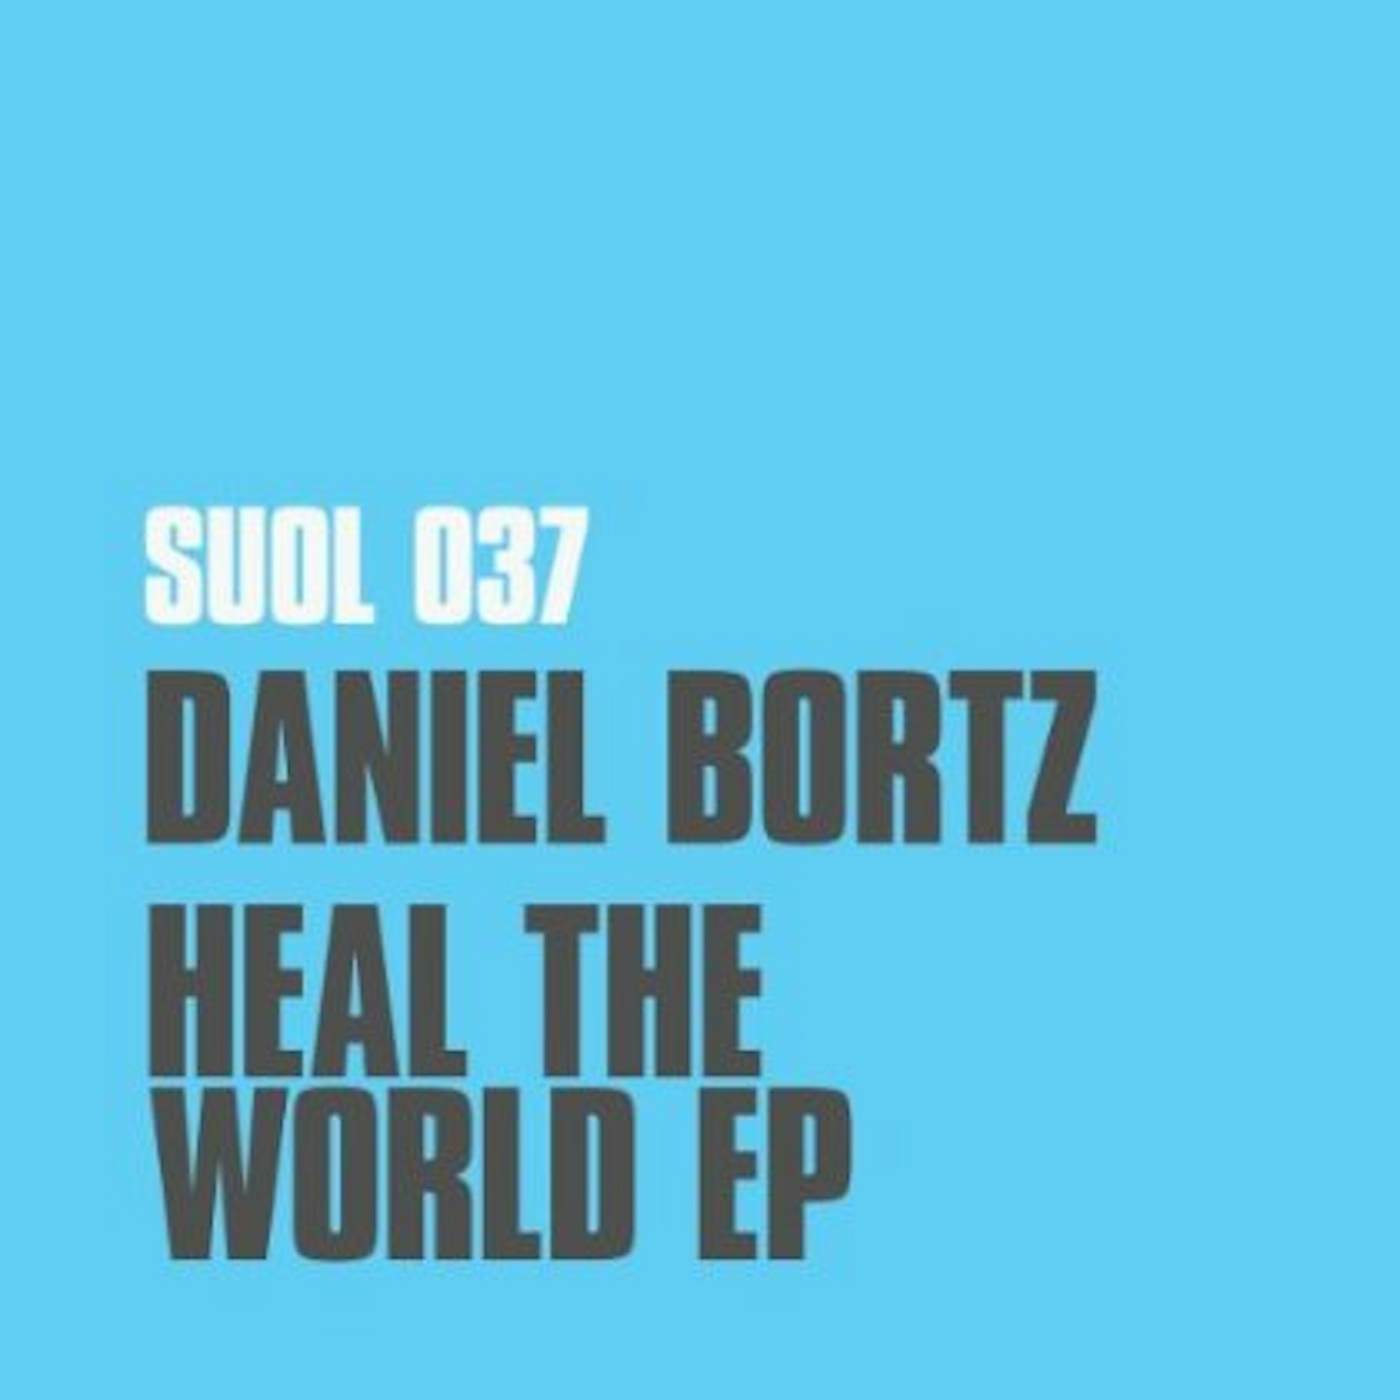 Daniel Bortz HEAL THE WORLD Vinyl Record